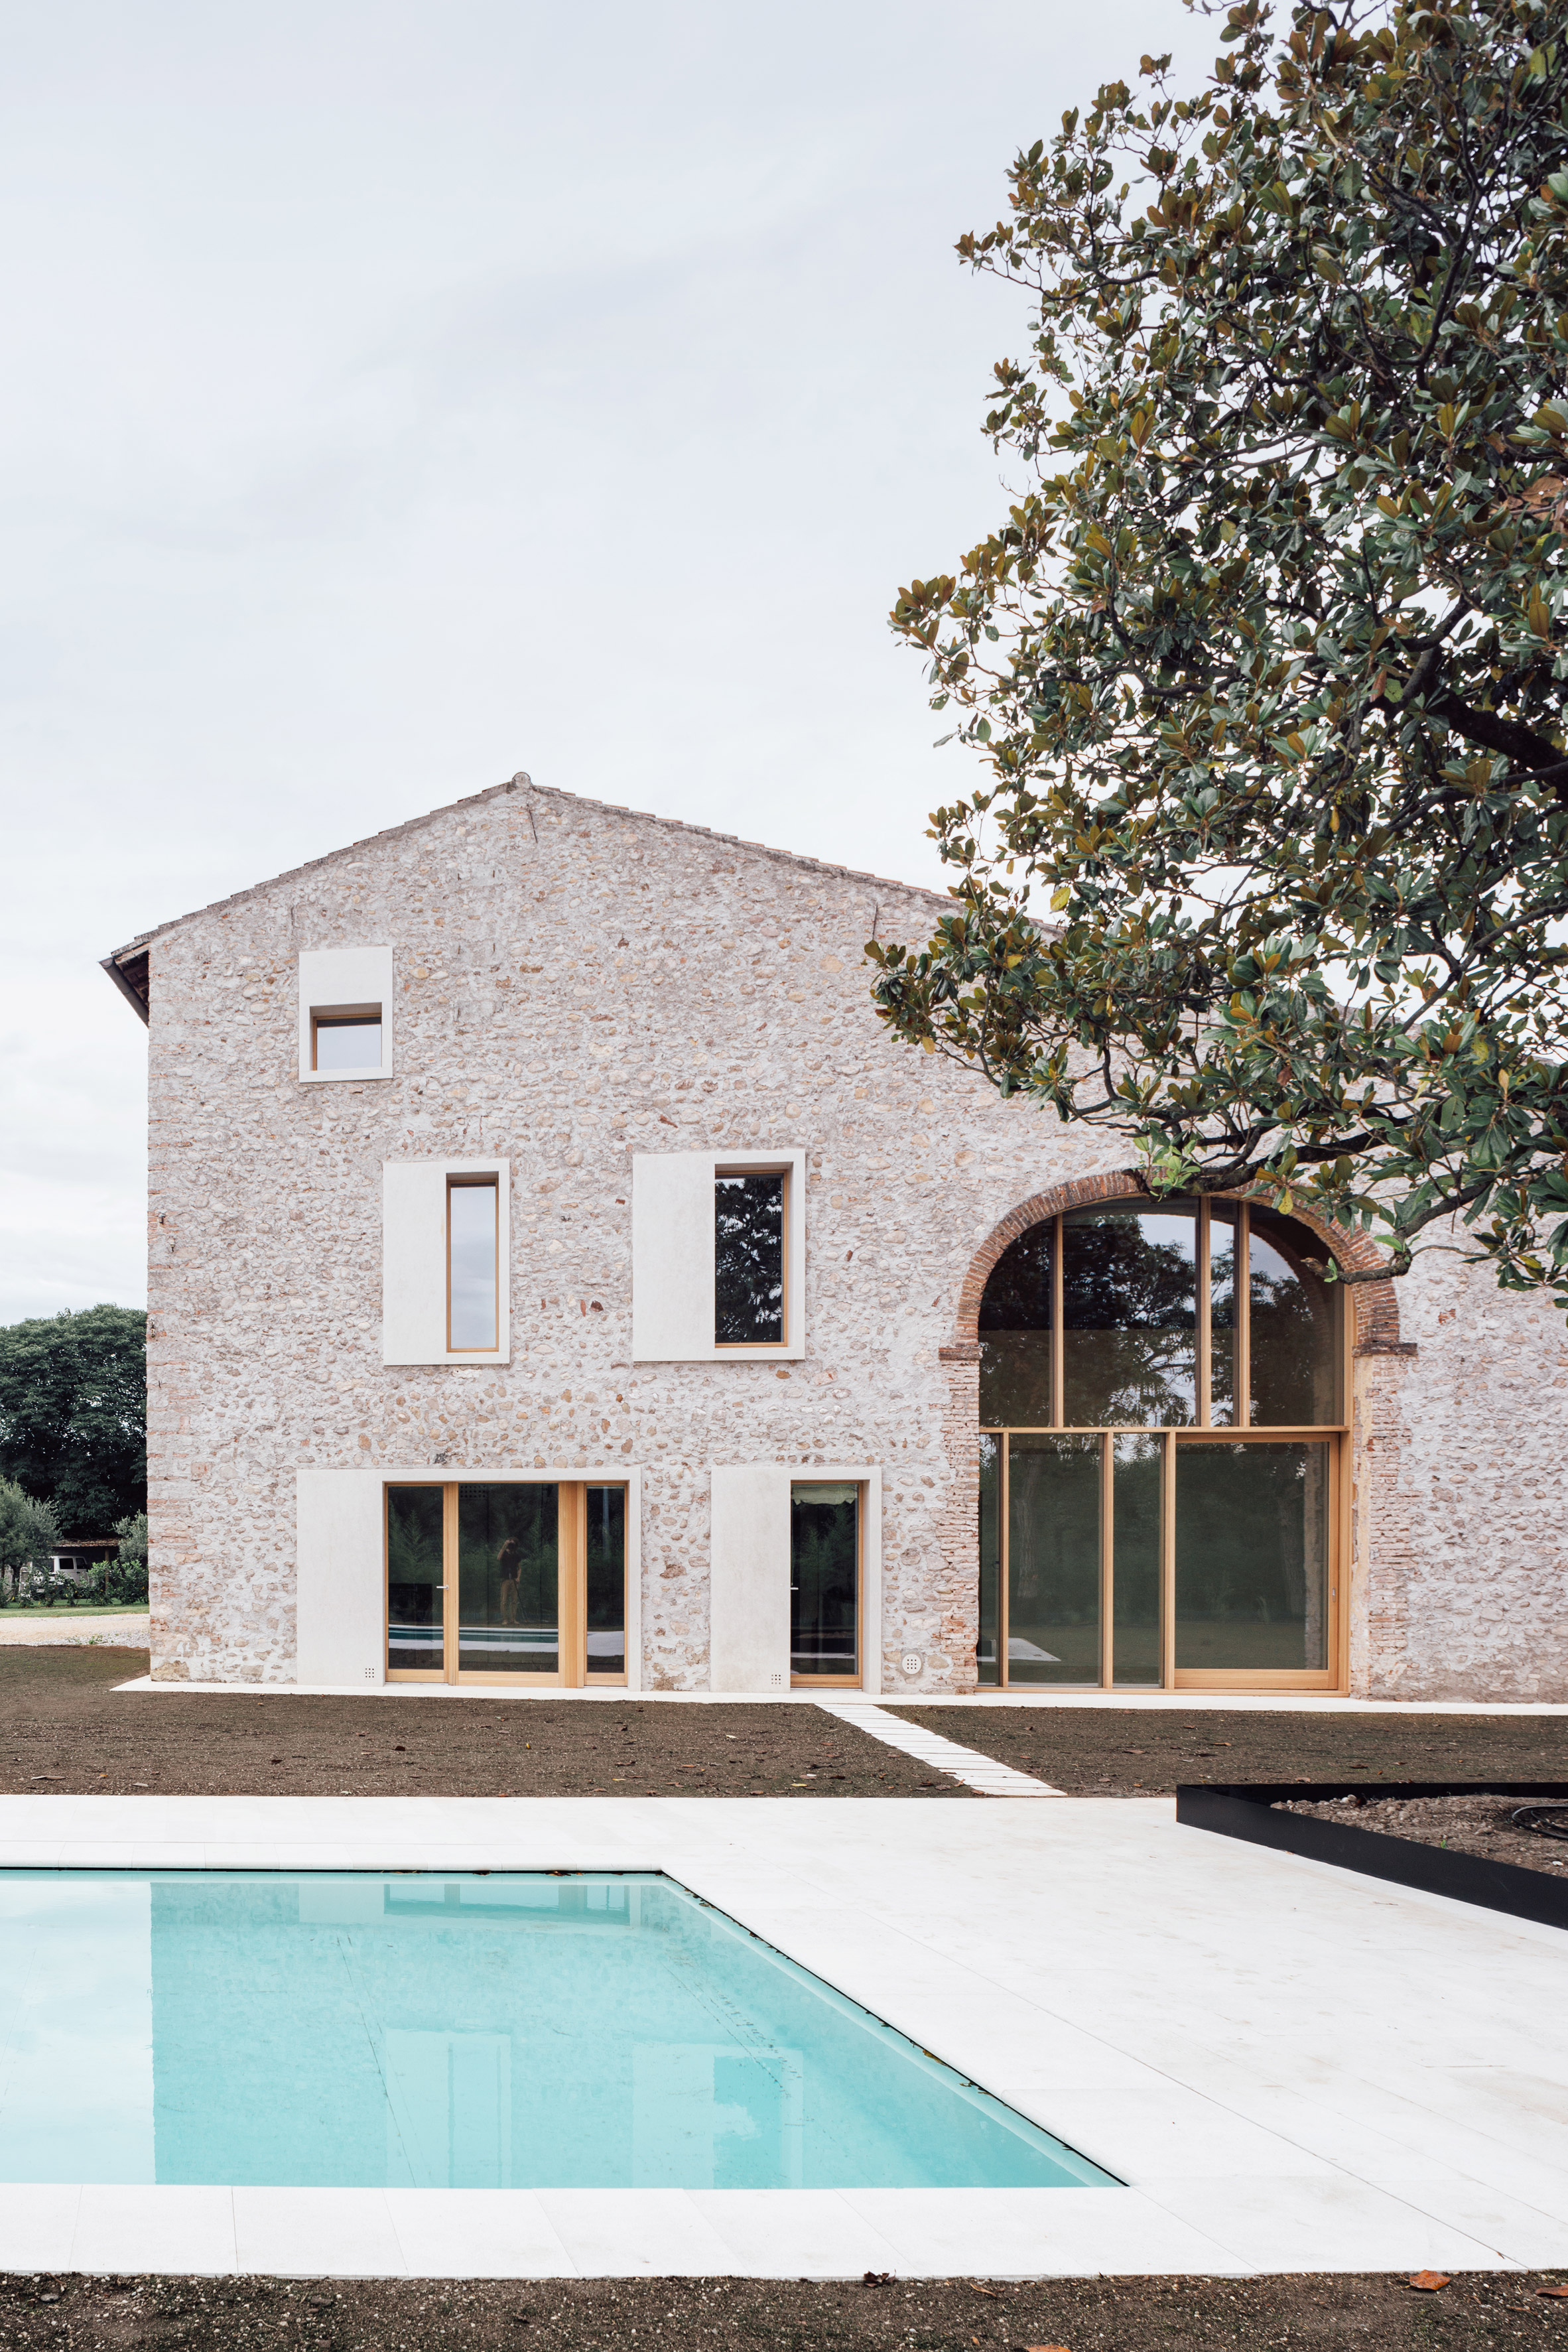 Studio Wok inserts home into stone barn in the Italian countryside